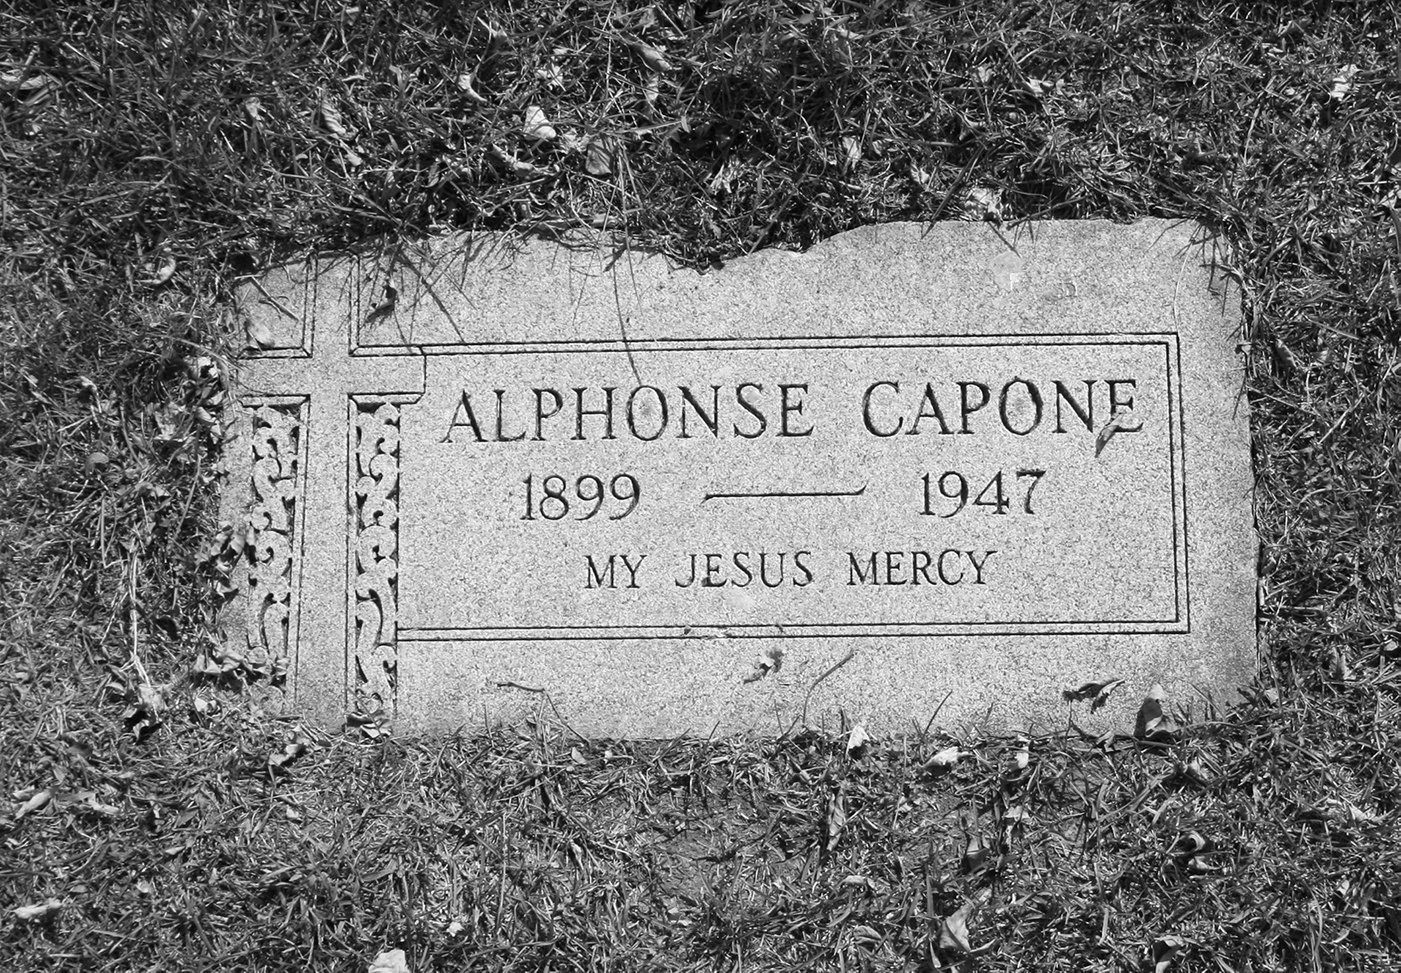 The grave of Alphonse "Al" Capone in black and white